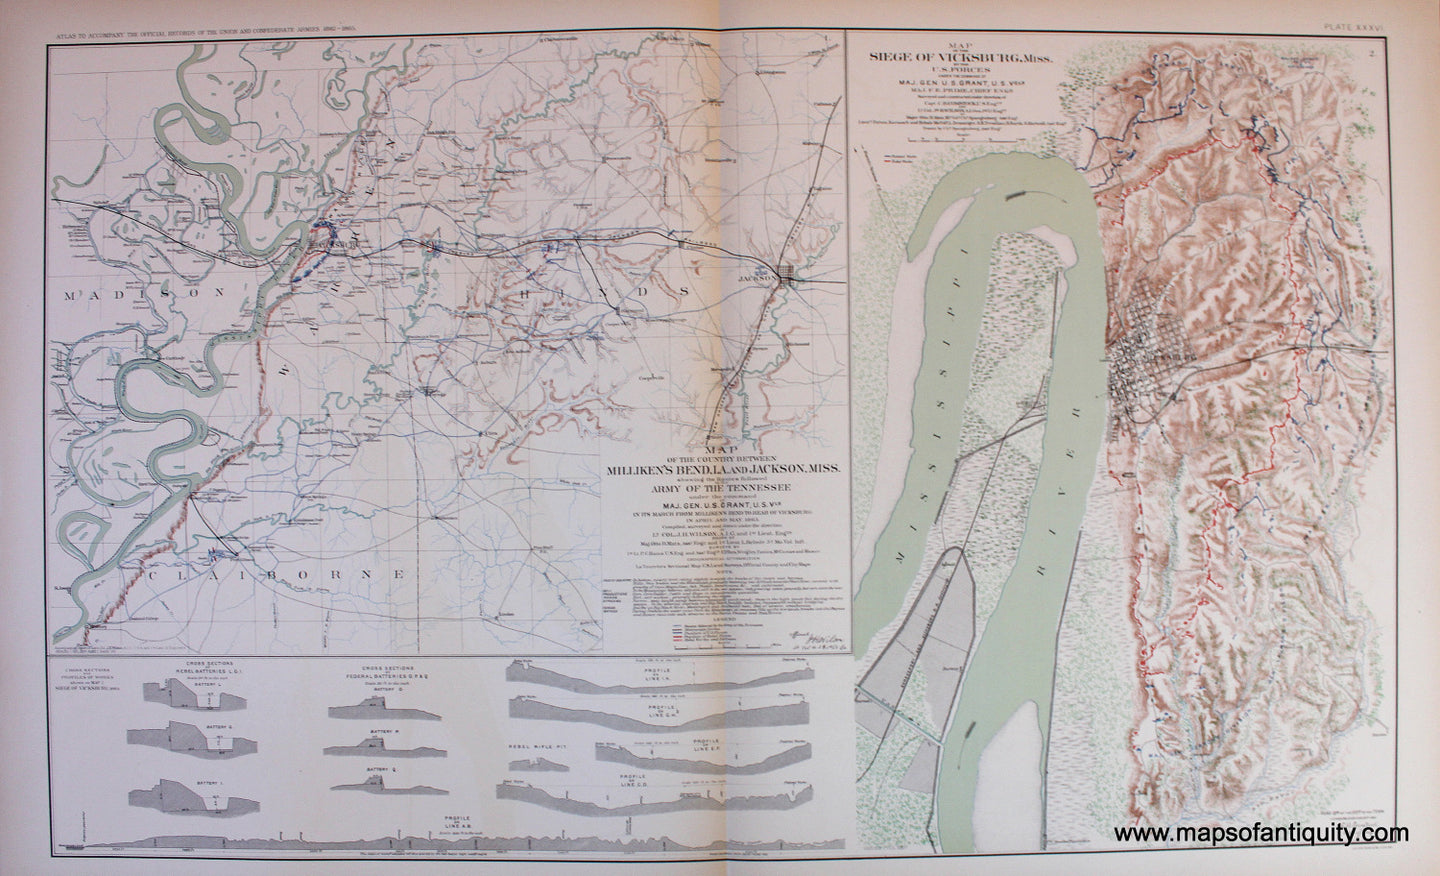 Antique-Colored-Printed-Map-Milliken's-Bend-LA-Jackson-Miss.-And-Siege-of-Vicksburg-Miss.-**********-Civil-War--1895-Bien-Maps-Of-Antiquity